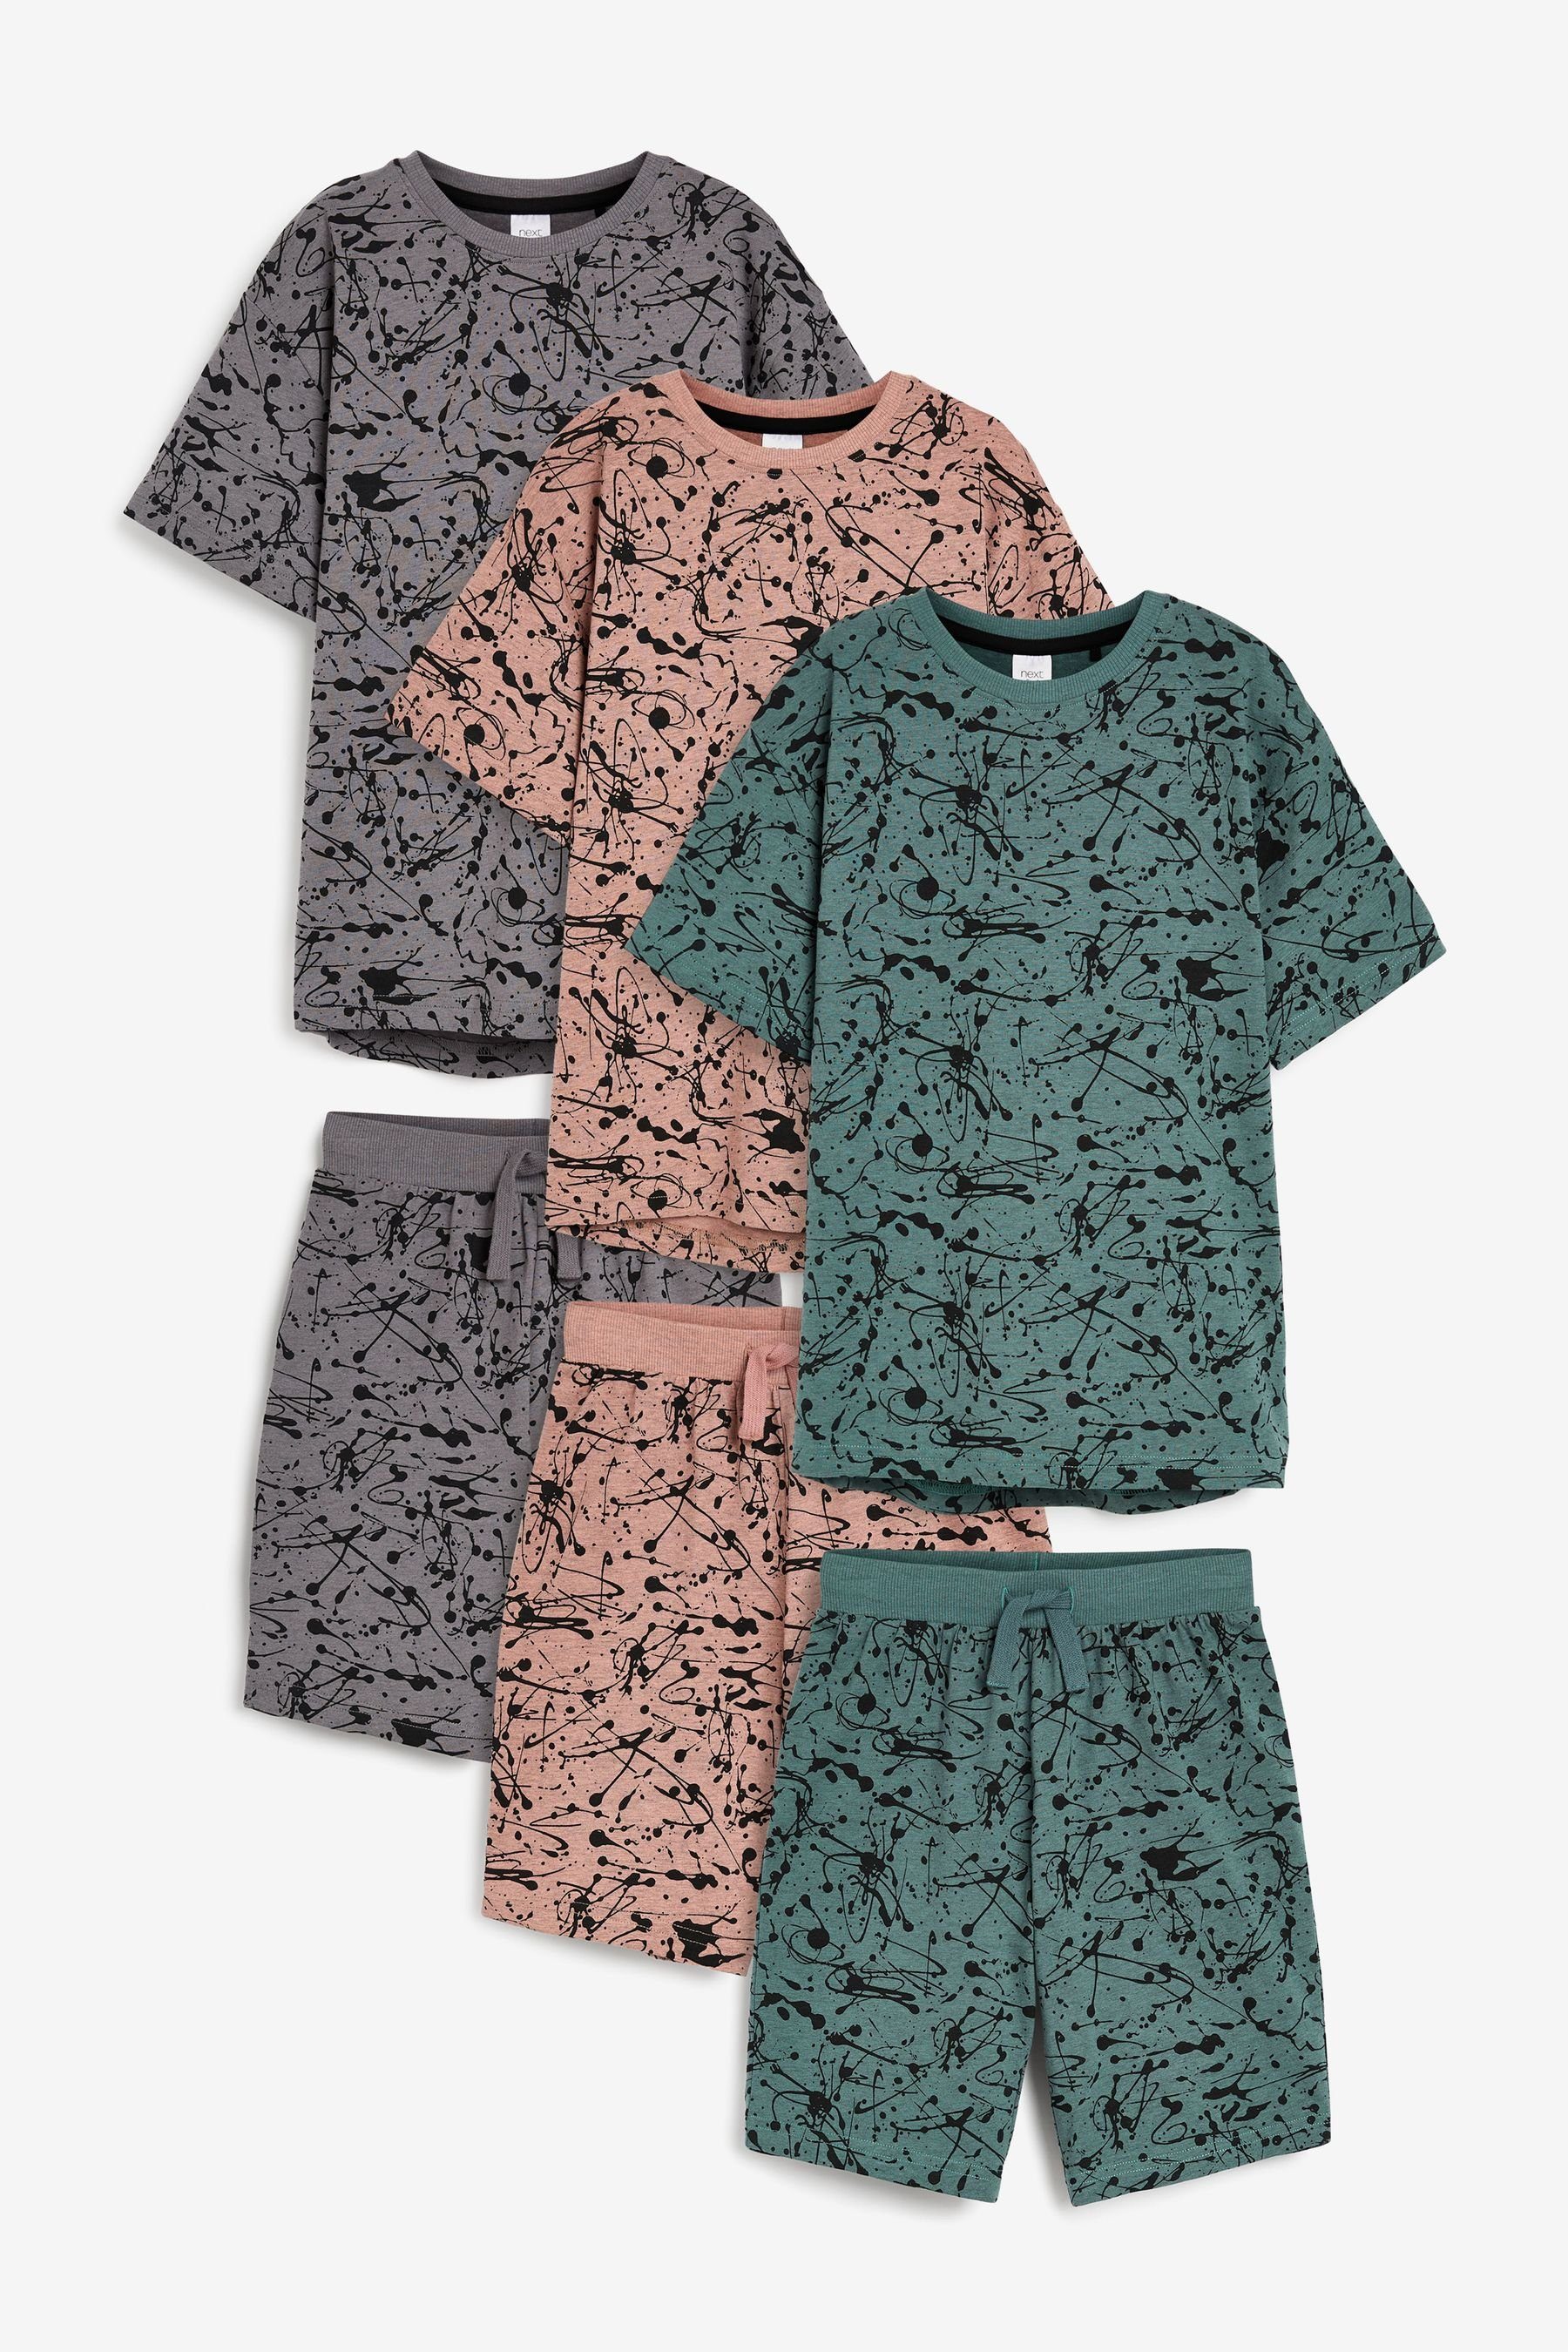 Next Pyjama Kurze Schlafanzüge, 3er-Pack (6 Teal/Grey tlg) Oversized Splat